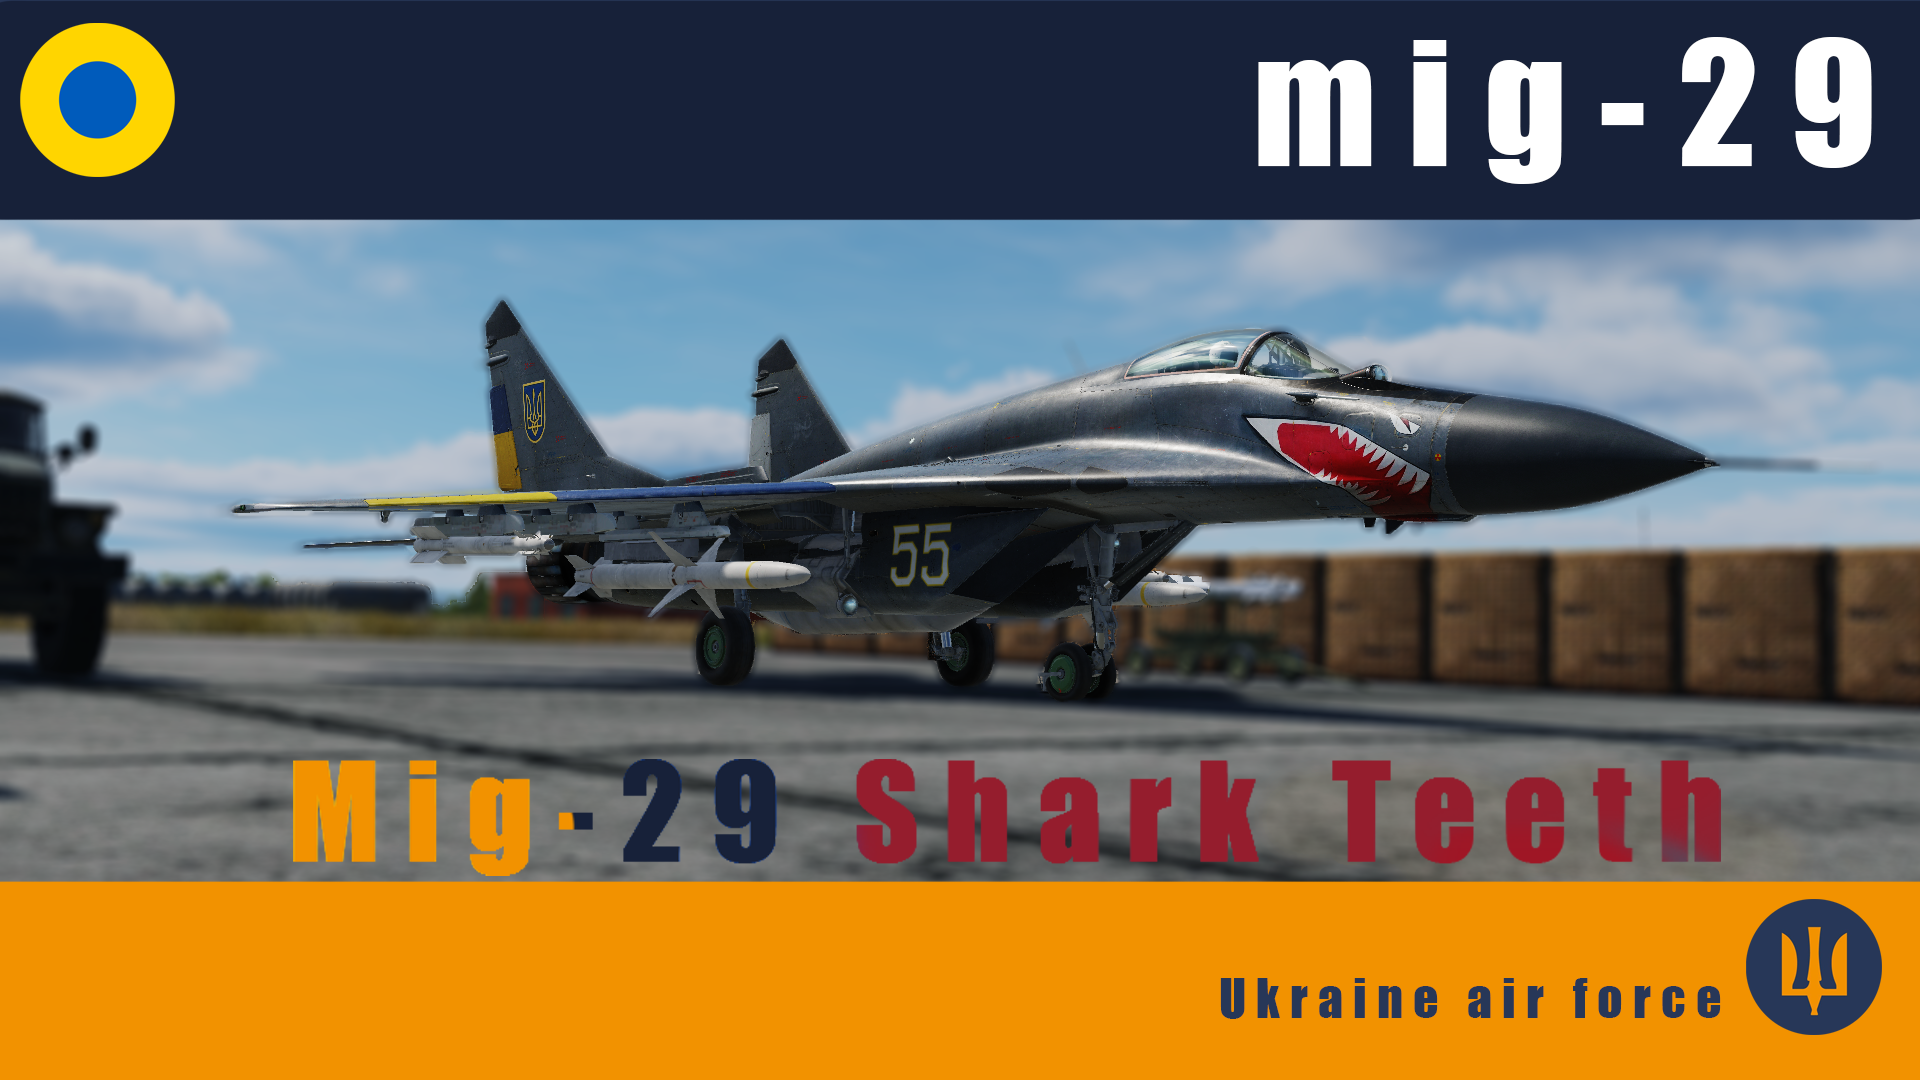 Mig-29 Shark Teeth | Ukraine mig-29c